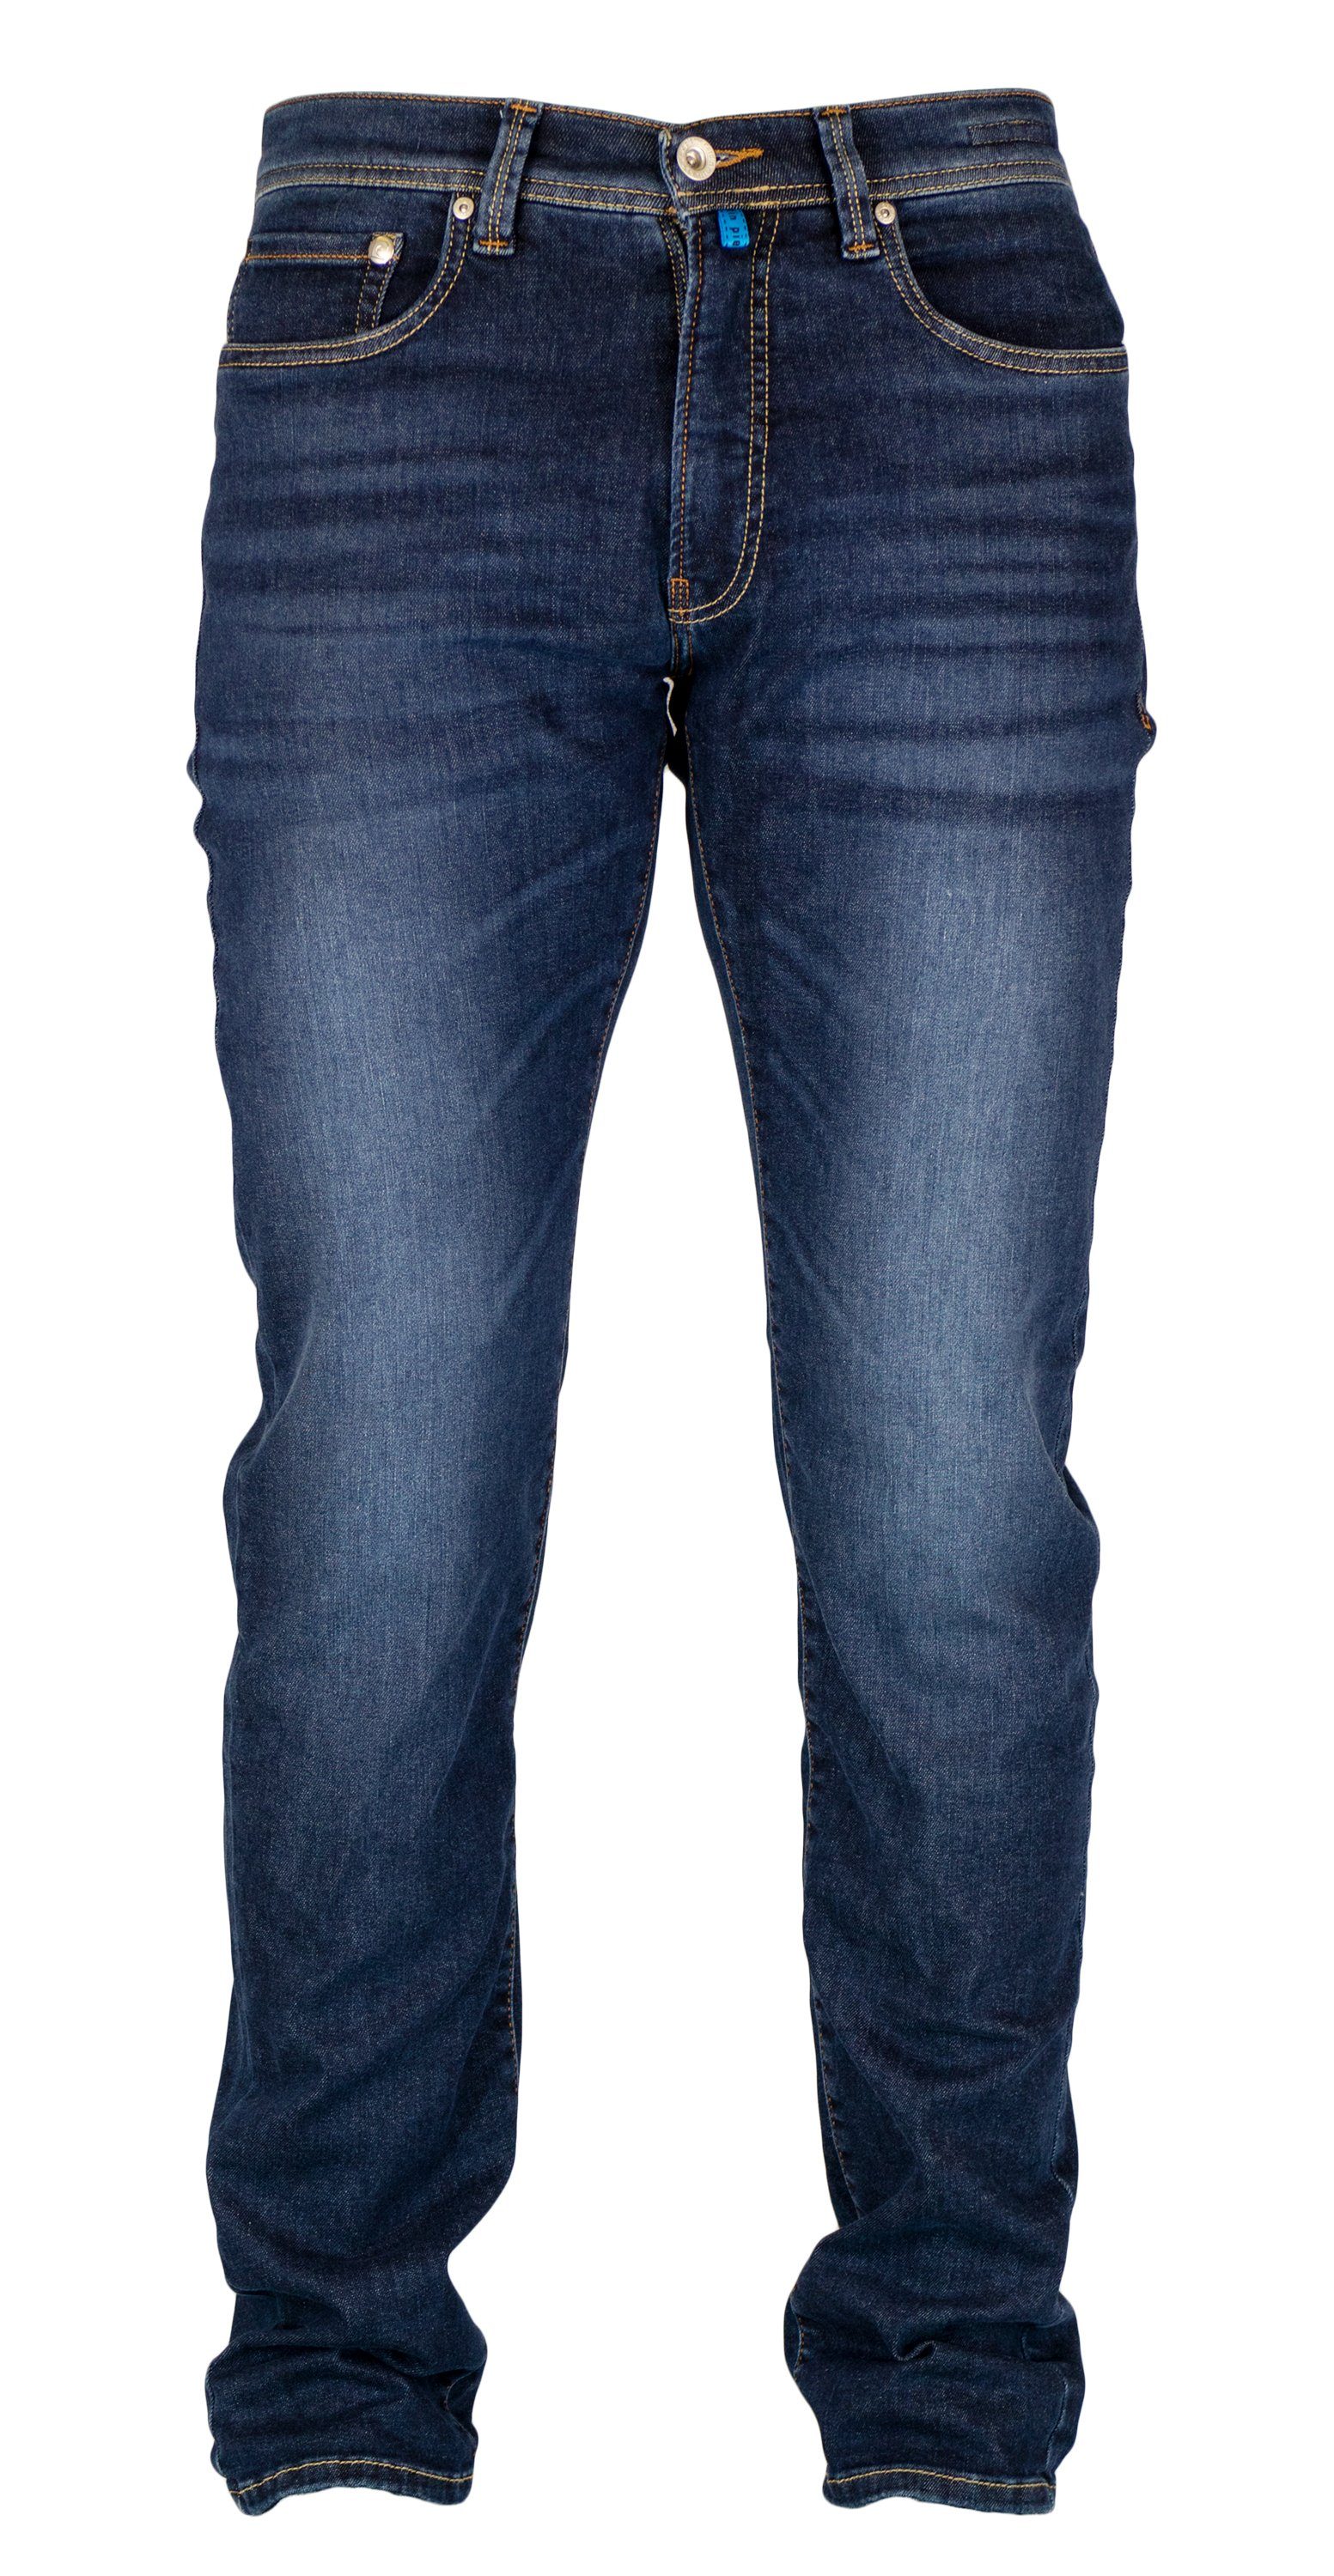 Pierre Cardin 5-Pocket-Jeans LYON 8880.63 dark indigo PIERRE CARDIN 3451 used FUTUREFLEX